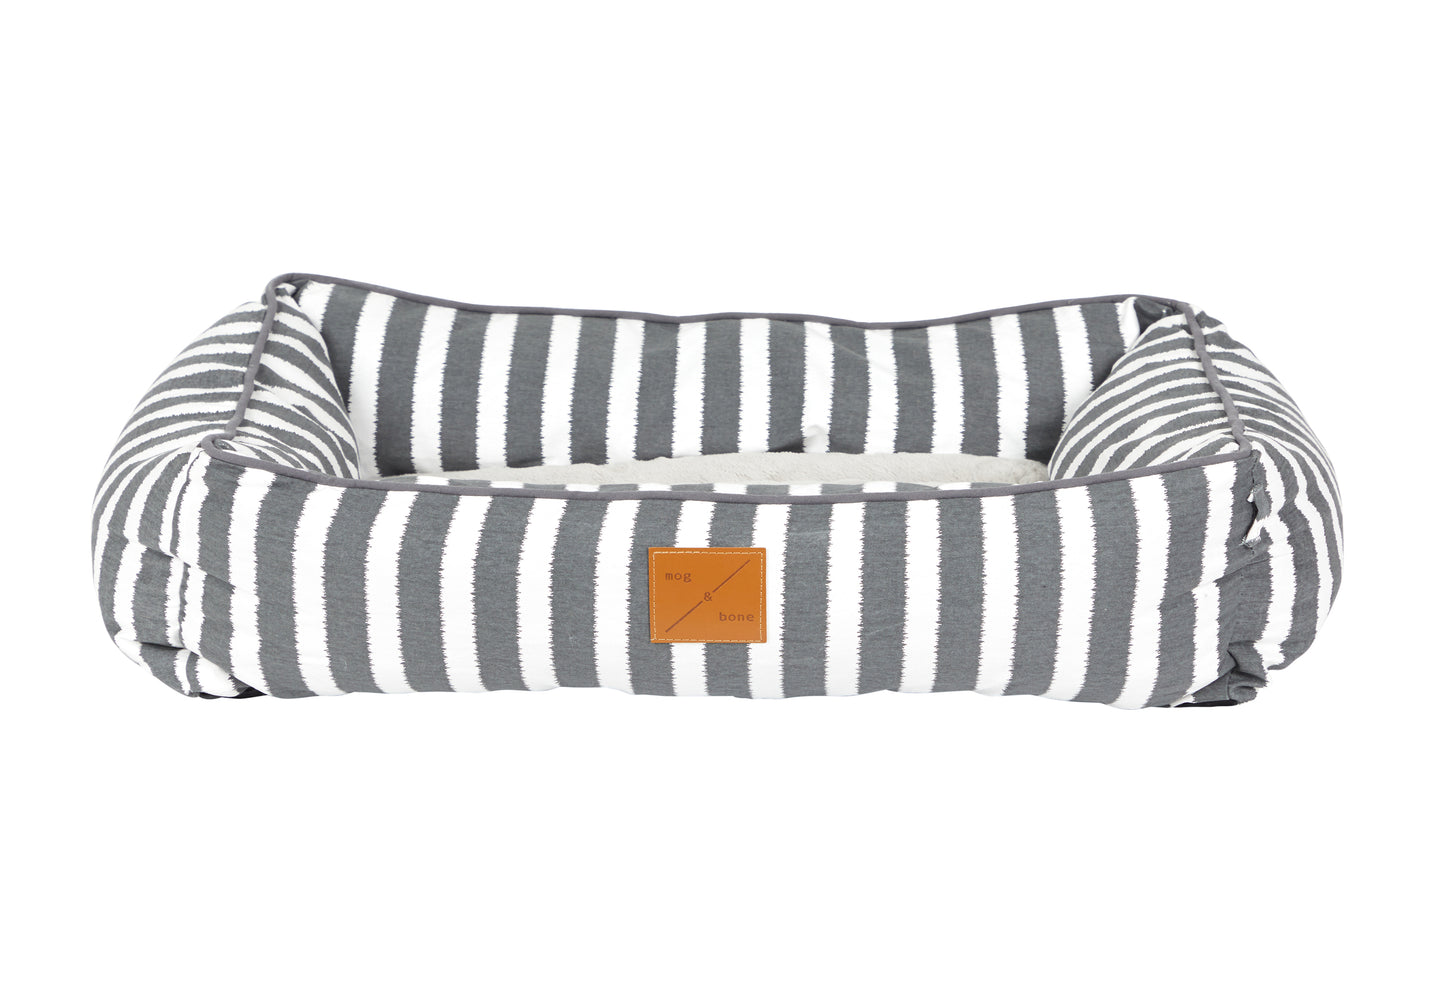 Mog & Bone Pet Products Bolster Dog Bed - Charcoal Hampton Stripe